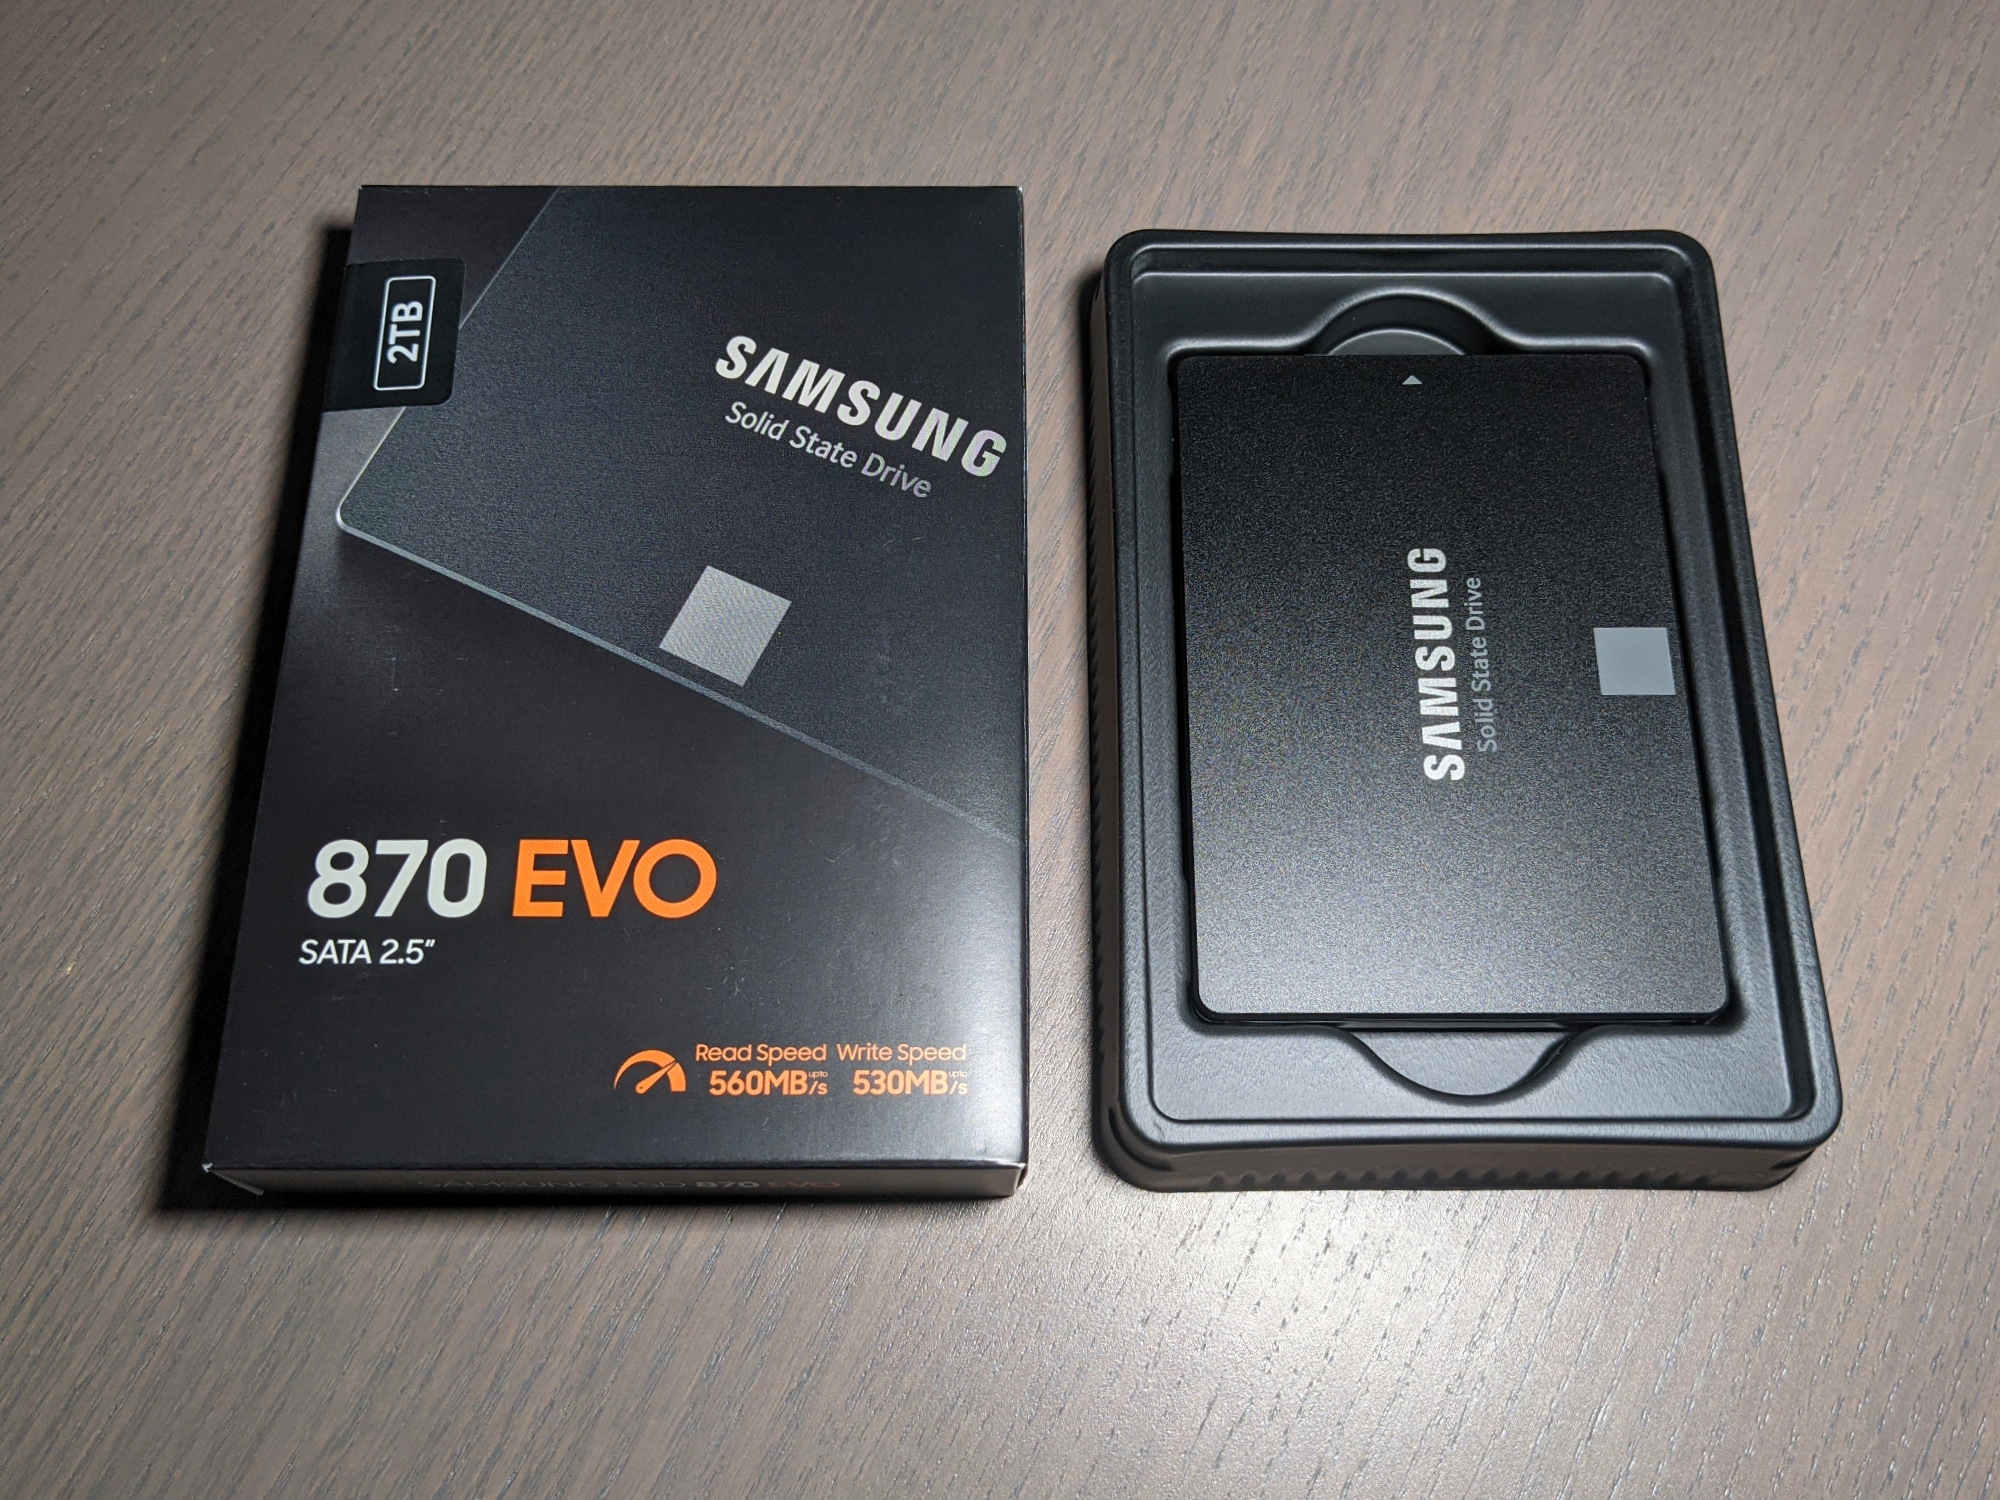 Samsung sata 870 evo купить. Samsung 870 EVO 1tb. SSD Samsung 870 EVO. Samsung 870 EVO SSD 2.5 1tb. SSD Samsung 870 EVO 1tb плата.